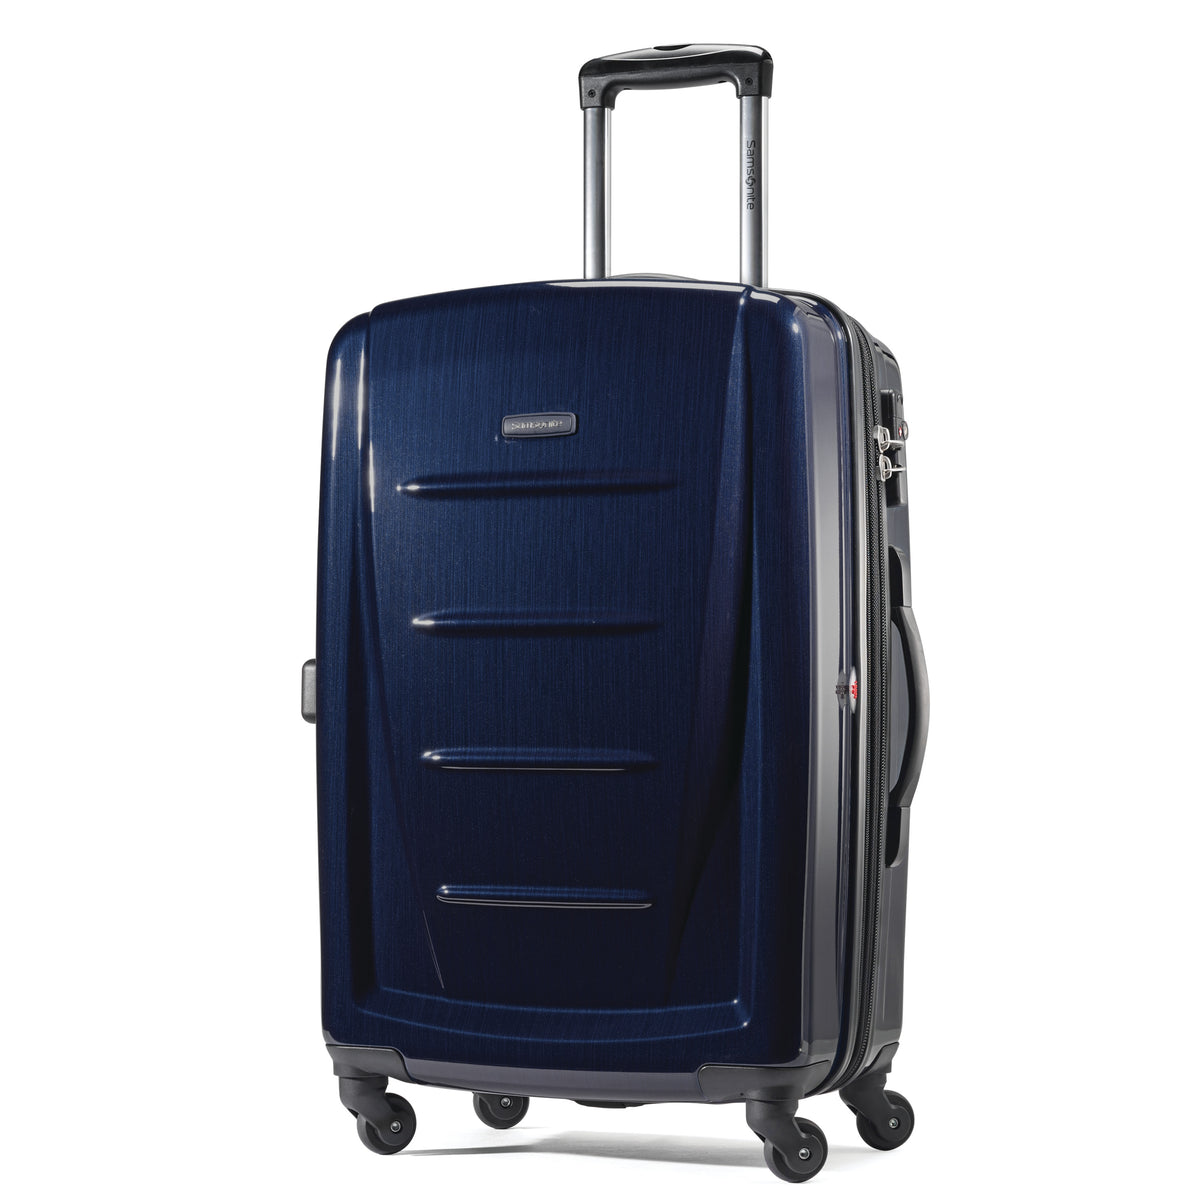 Samsonite Winfield 2 Hardside Luggage with Spinner Wheels U12